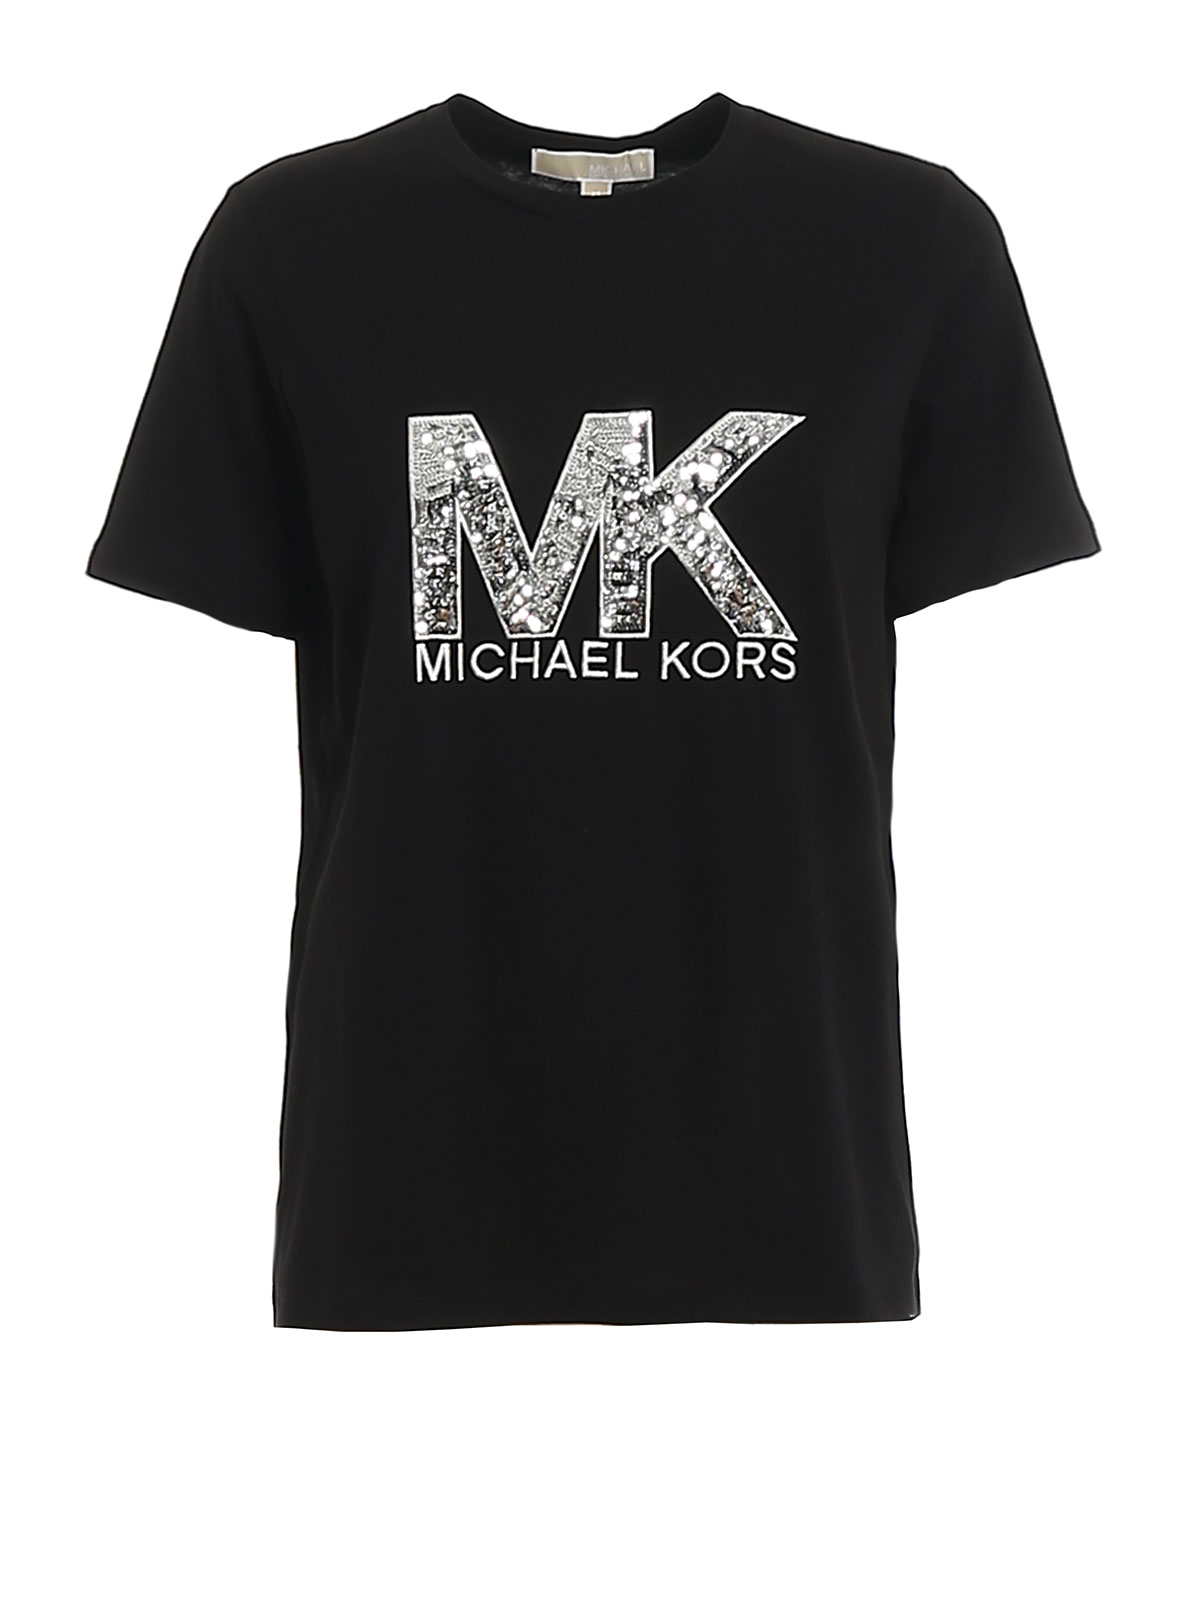 Camisetas Michael Kors - Camiseta - Negro - MH95MCE97J001 